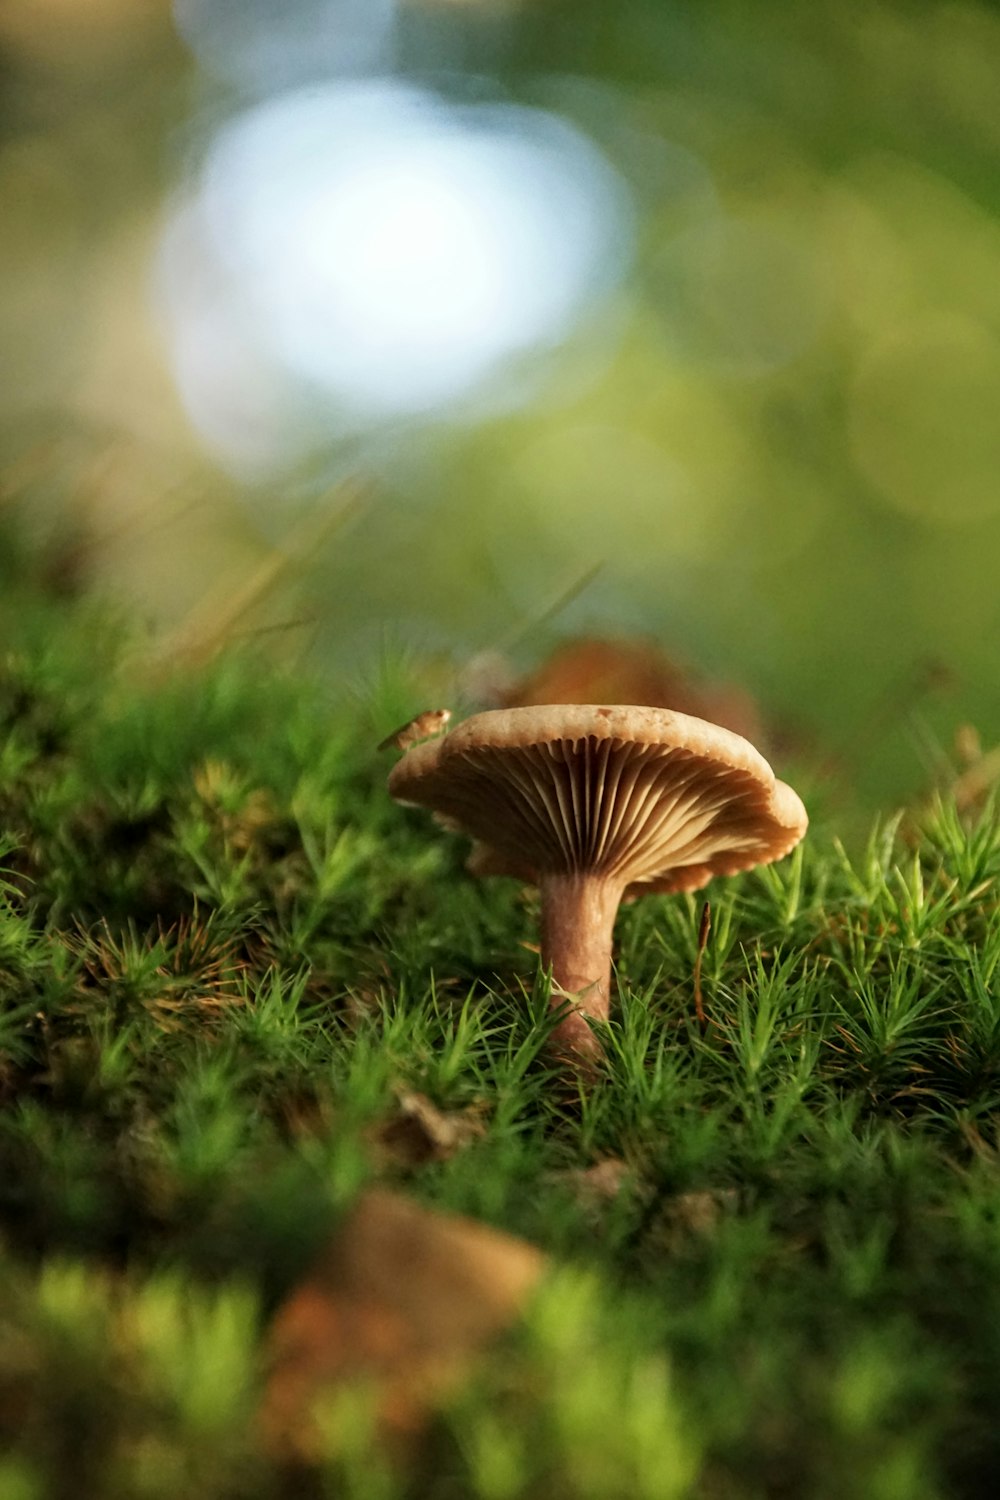 a mushroom growing in grass